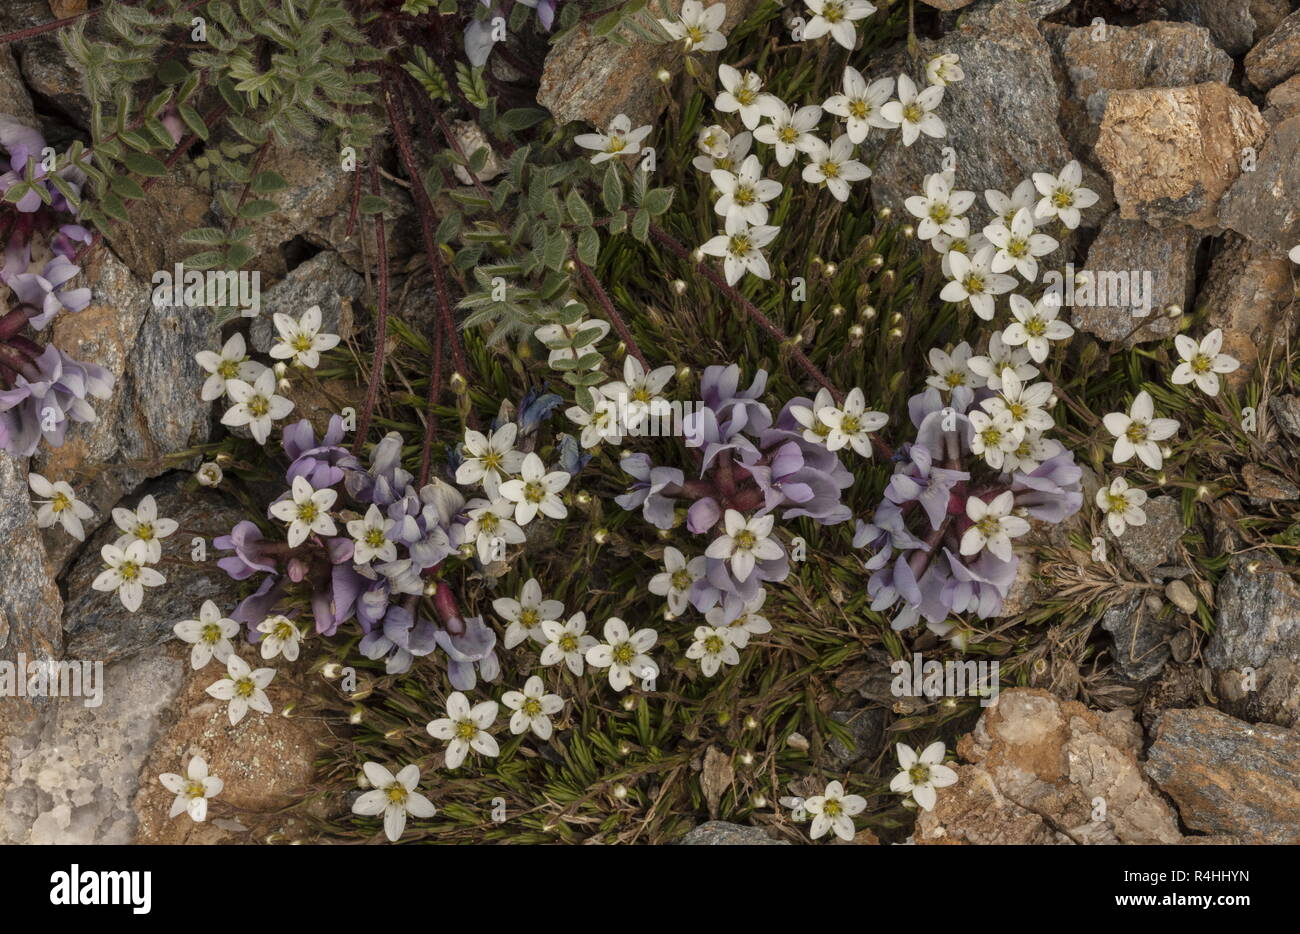 Swiss milk-vetch, Oxytropis helvetica, and Spring Sandwort,  minuartia verna in flower high in the Vanoise National Park, French Alps. Stock Photo